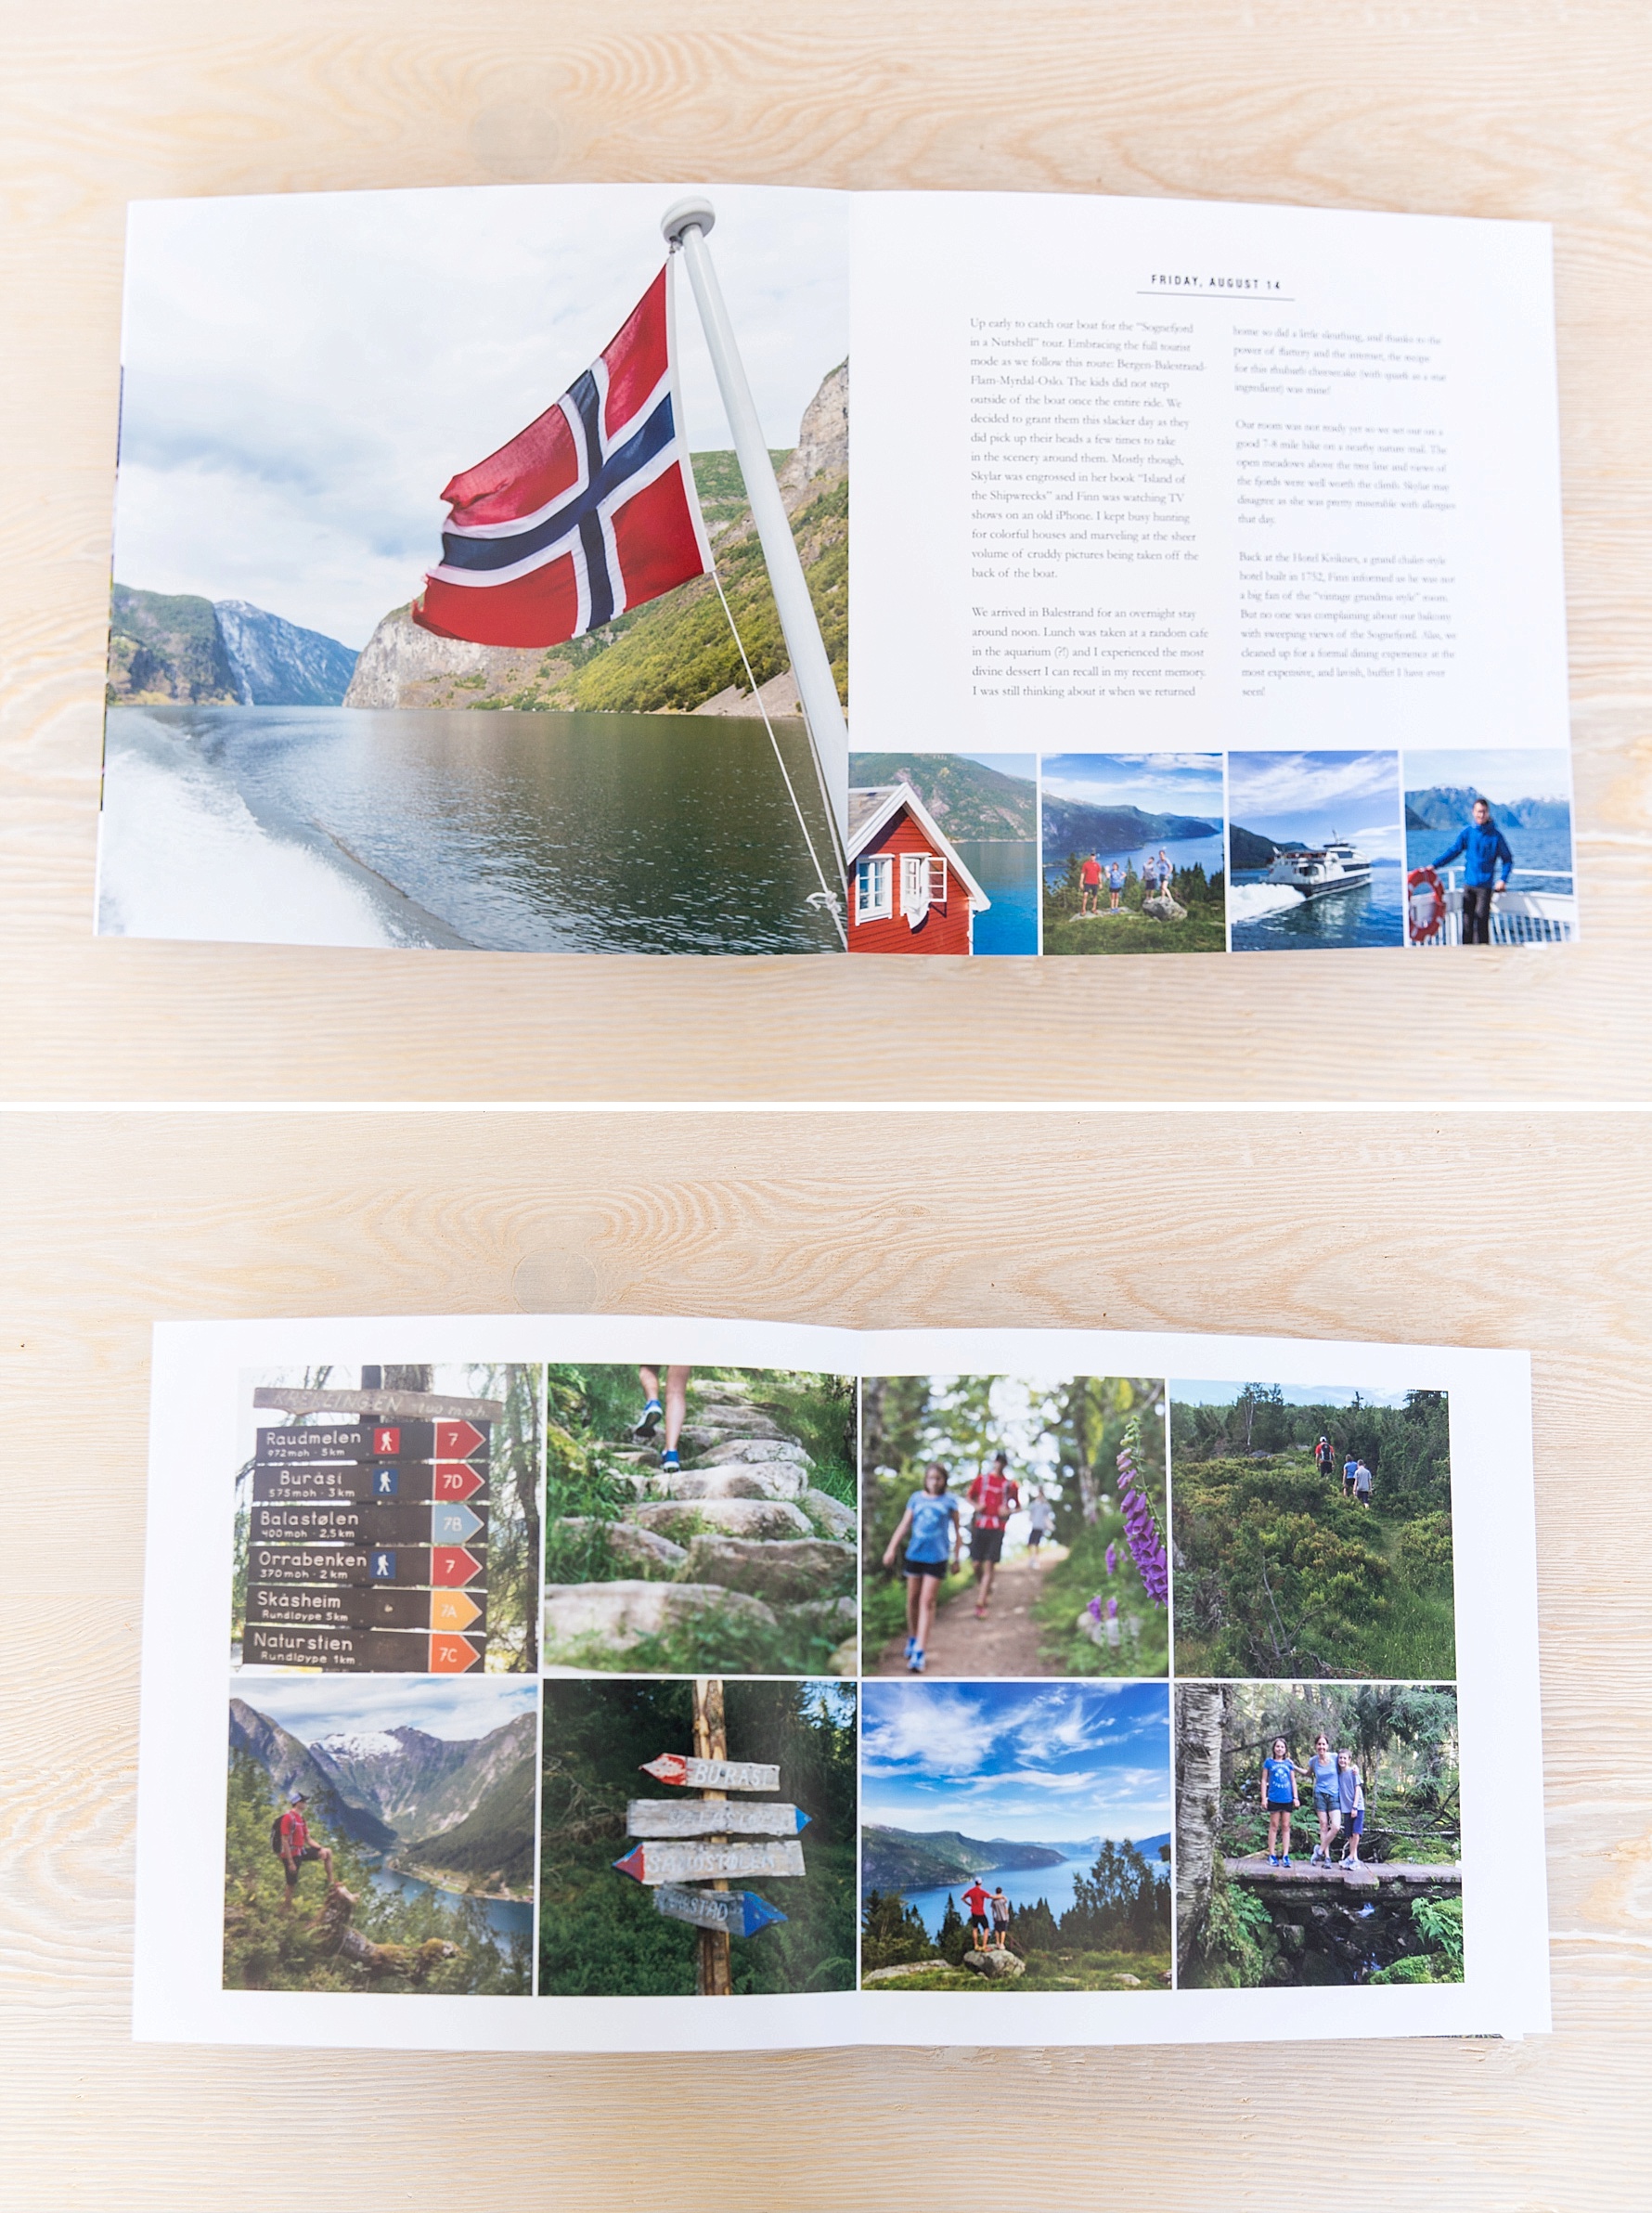 Document Your Travels | Sweden & Norway Vacation Photo Book | www.suzanneobrienstudio.com